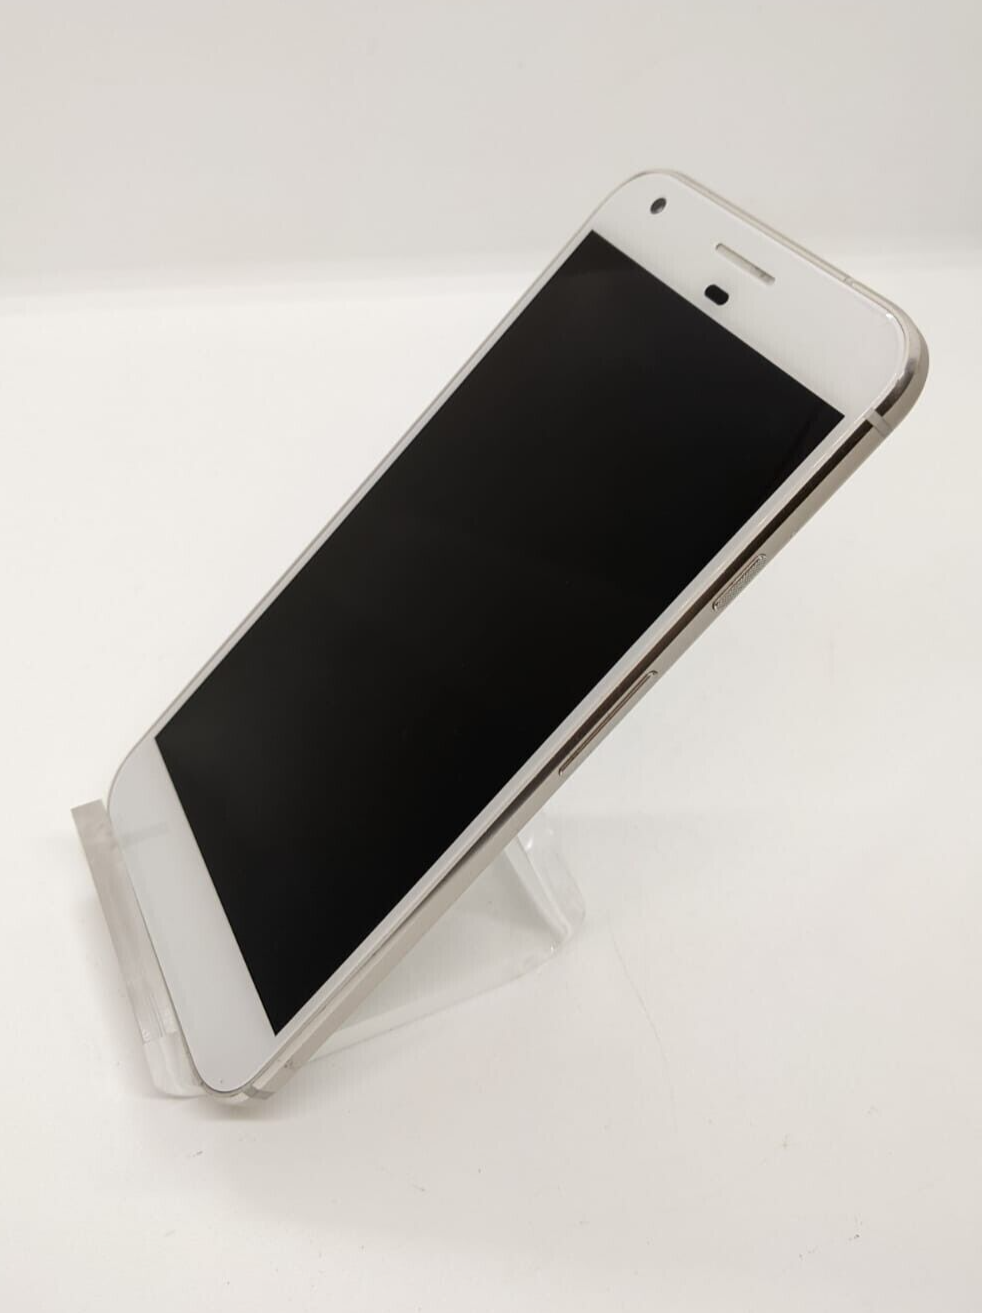 Google Pixel XL 128GB Unlocked Silver Smartphone 2PW2100 Unlockable Bootloader